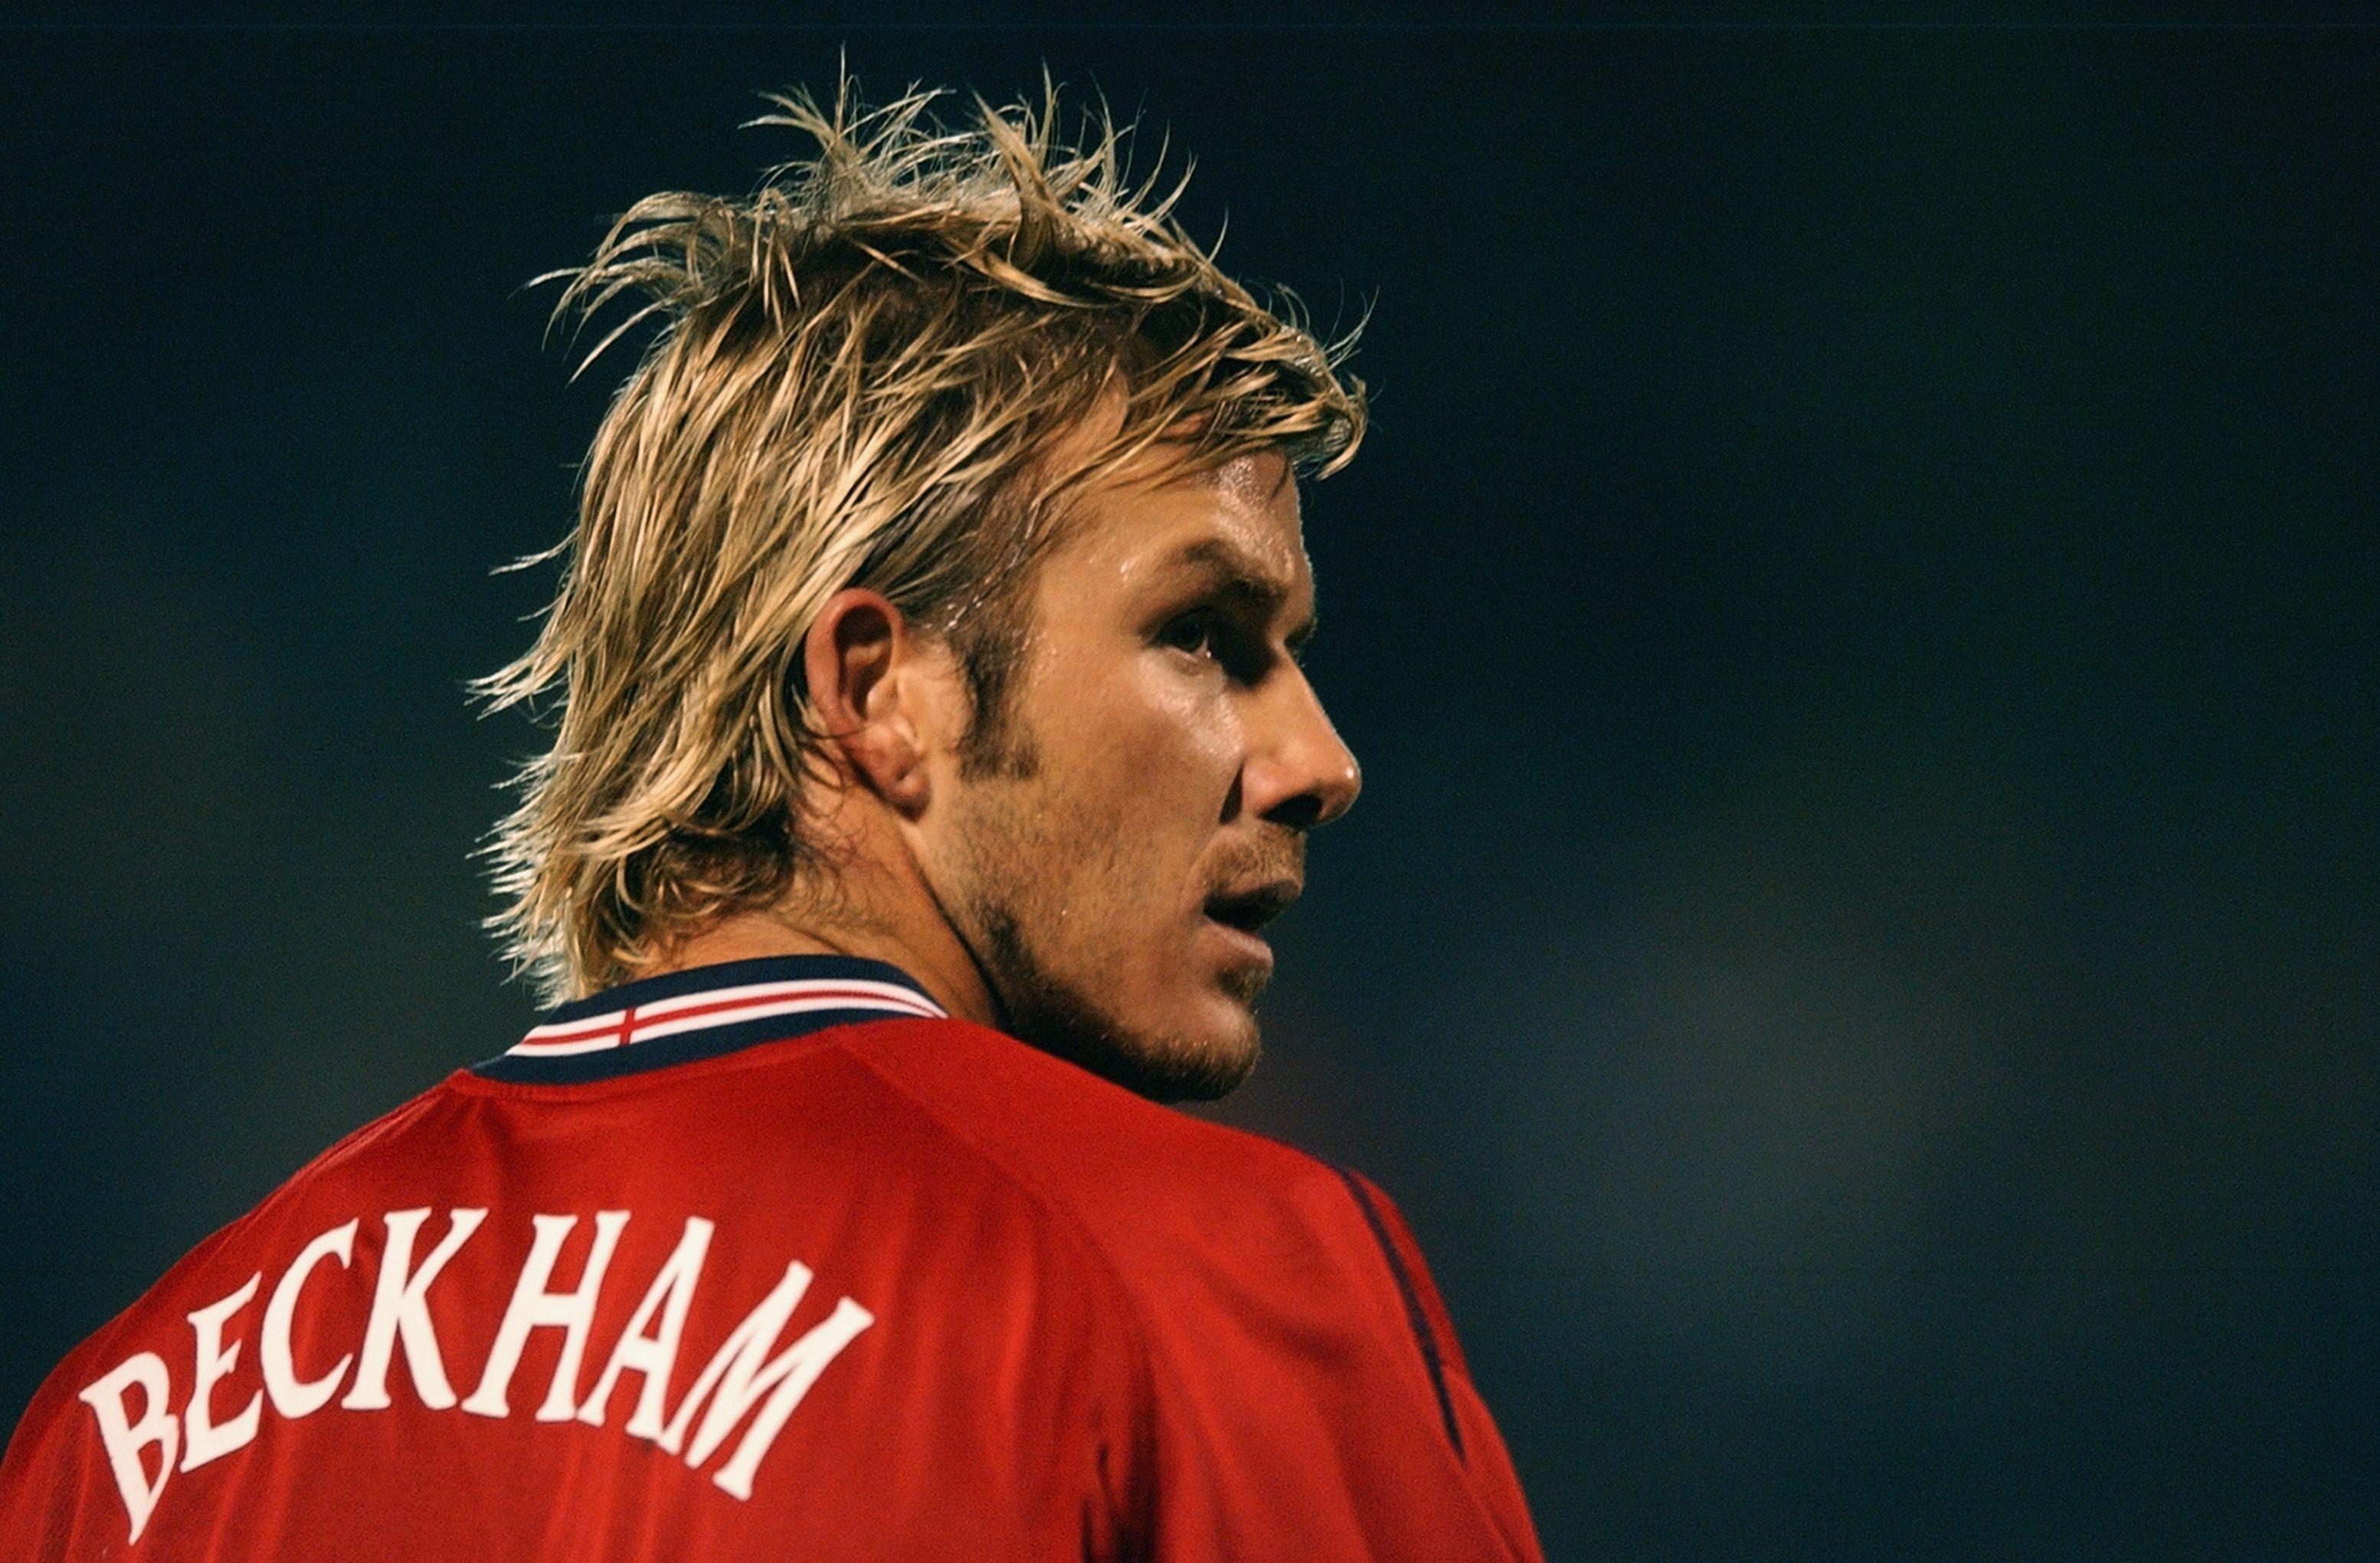 David Beckham 4K Wallpapers - Top Free David Beckham 4K Backgrounds